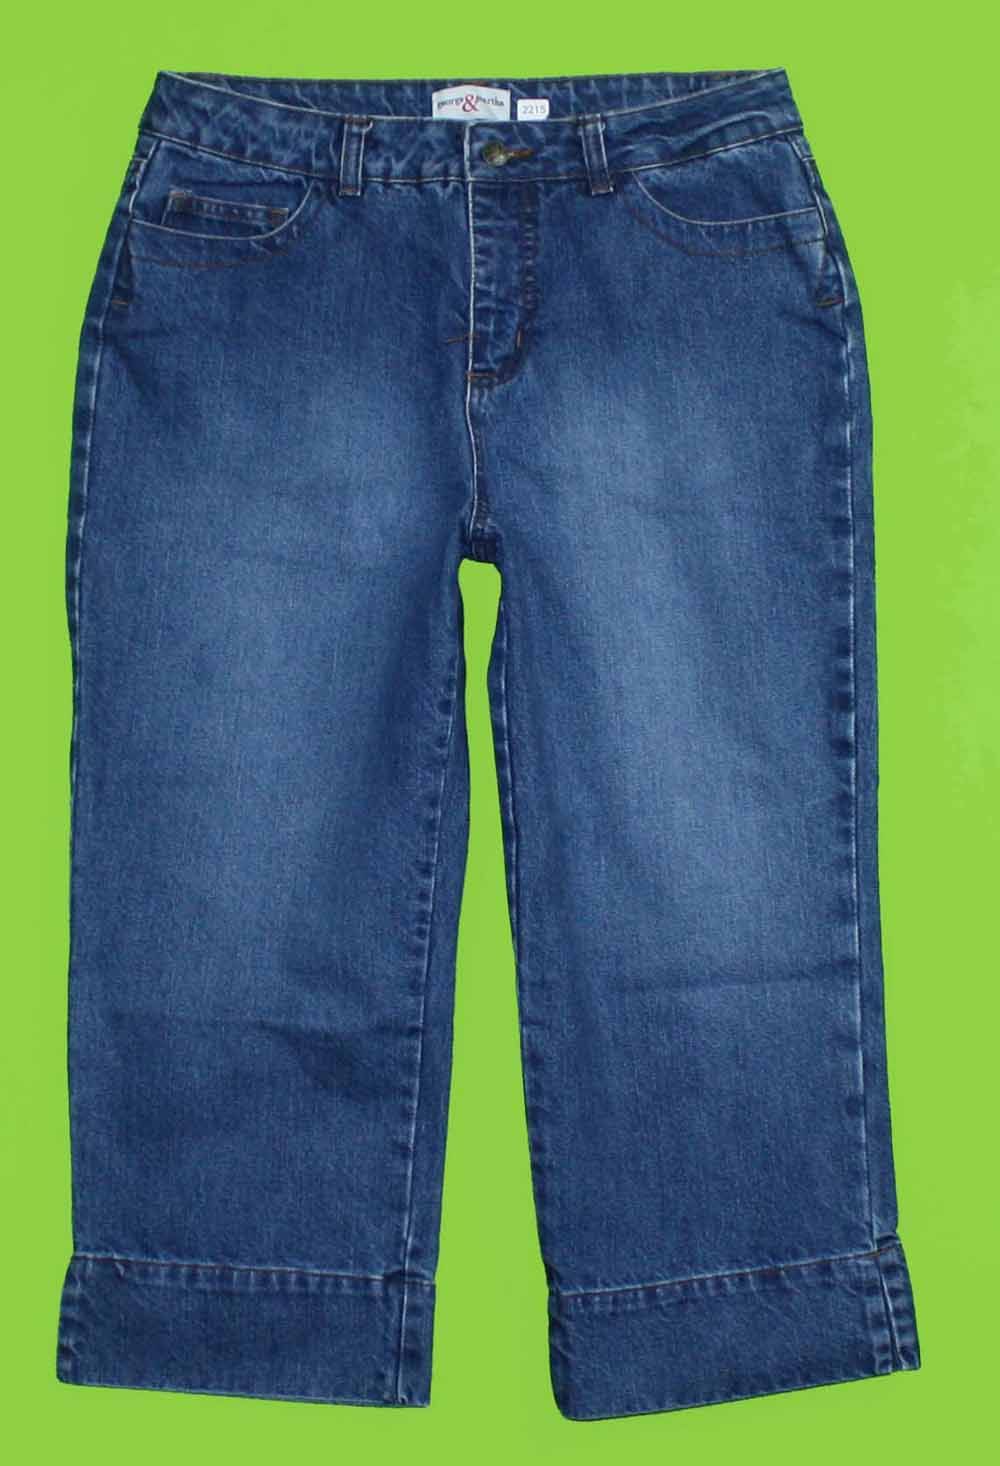 George & Martha sz 10 Capri Womens Blue Jeans Denim Pants GI26